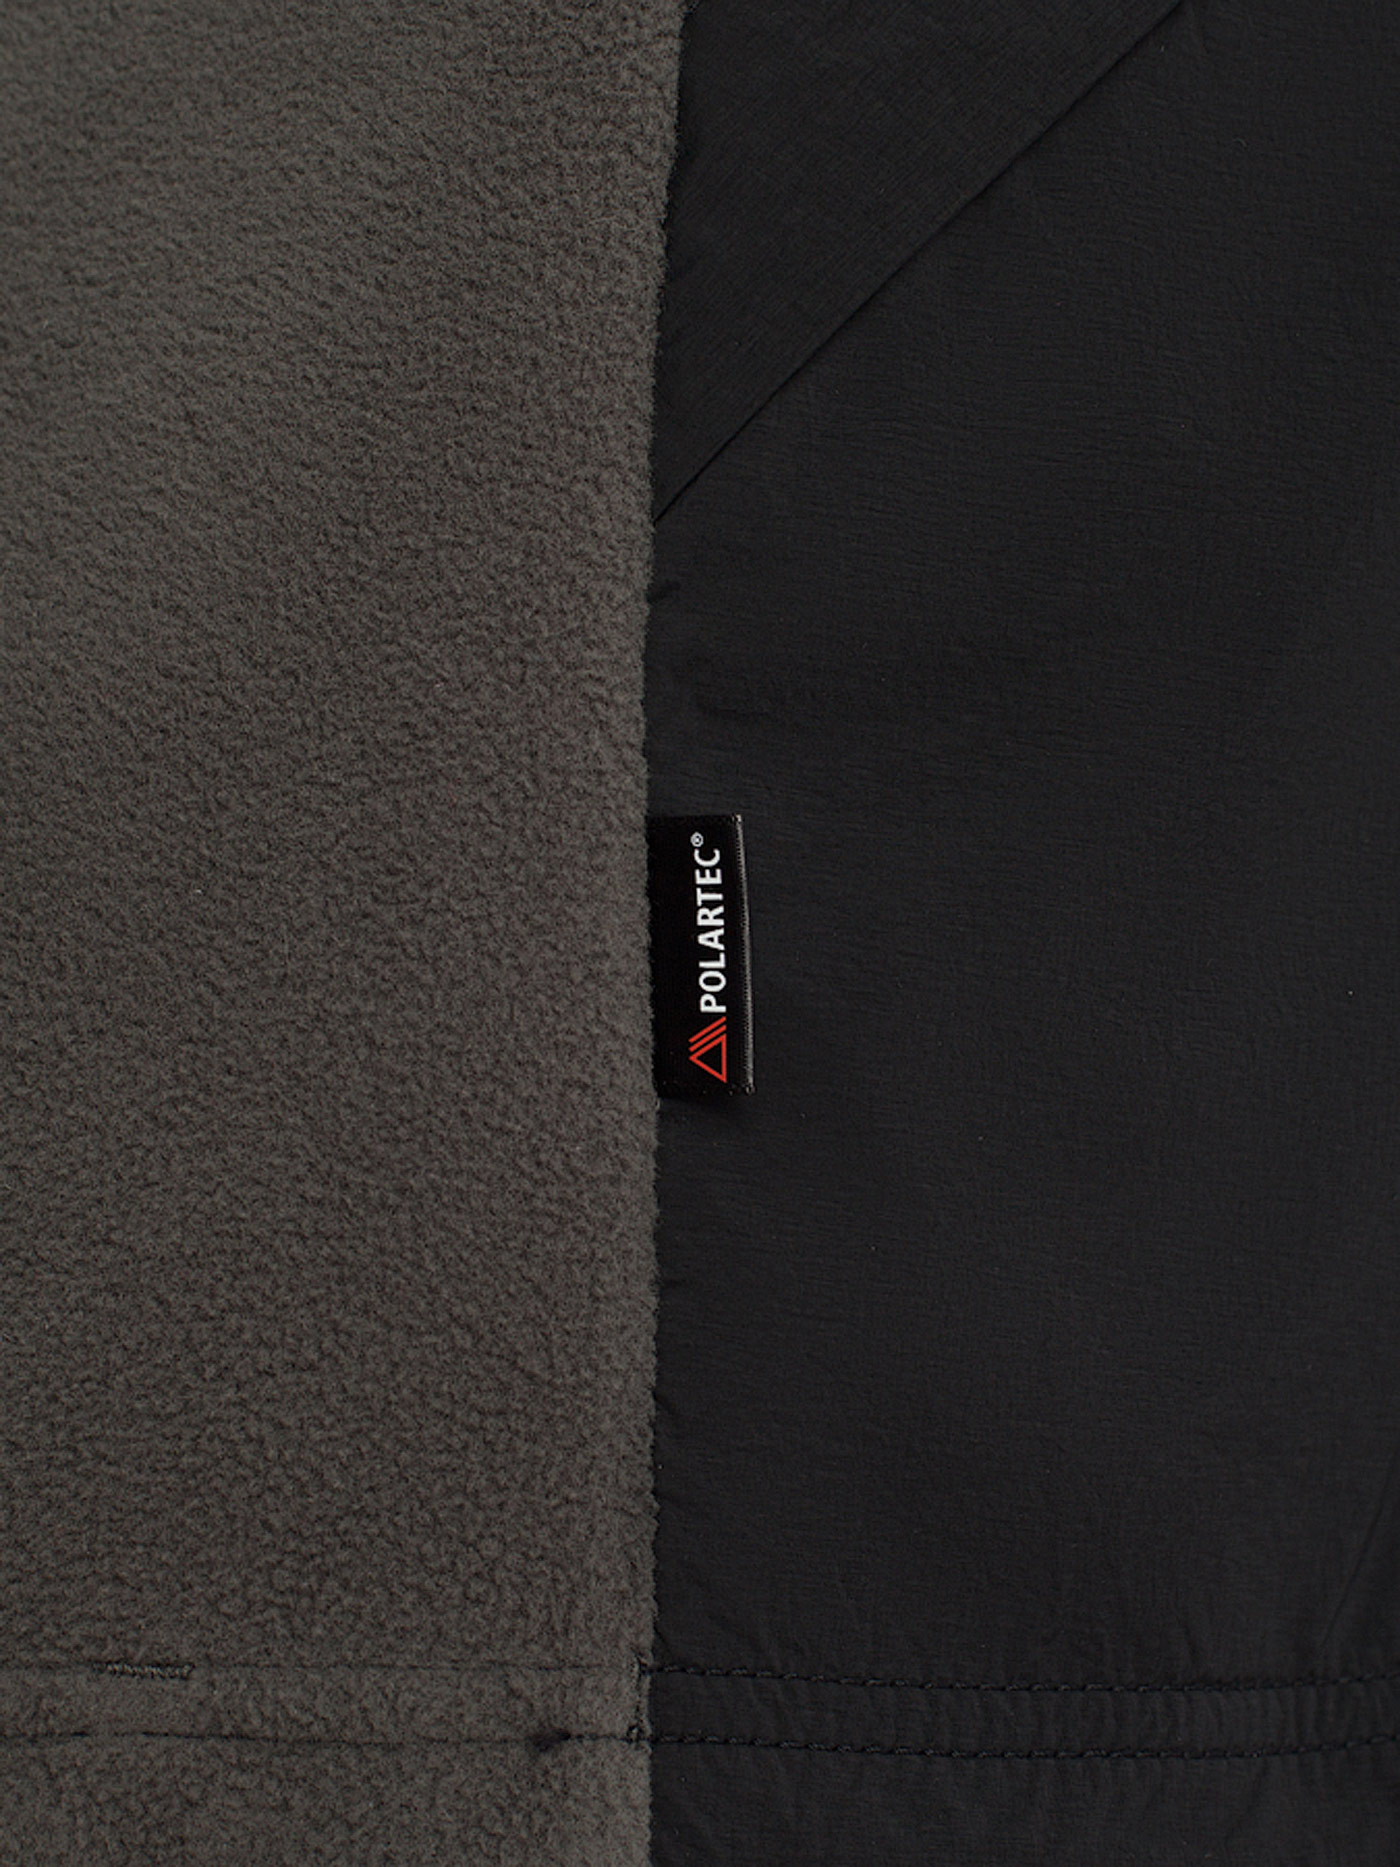 Куртка BASK, размер 50, цвет серый 19112-9609-050 MICRO MJ - фото 6